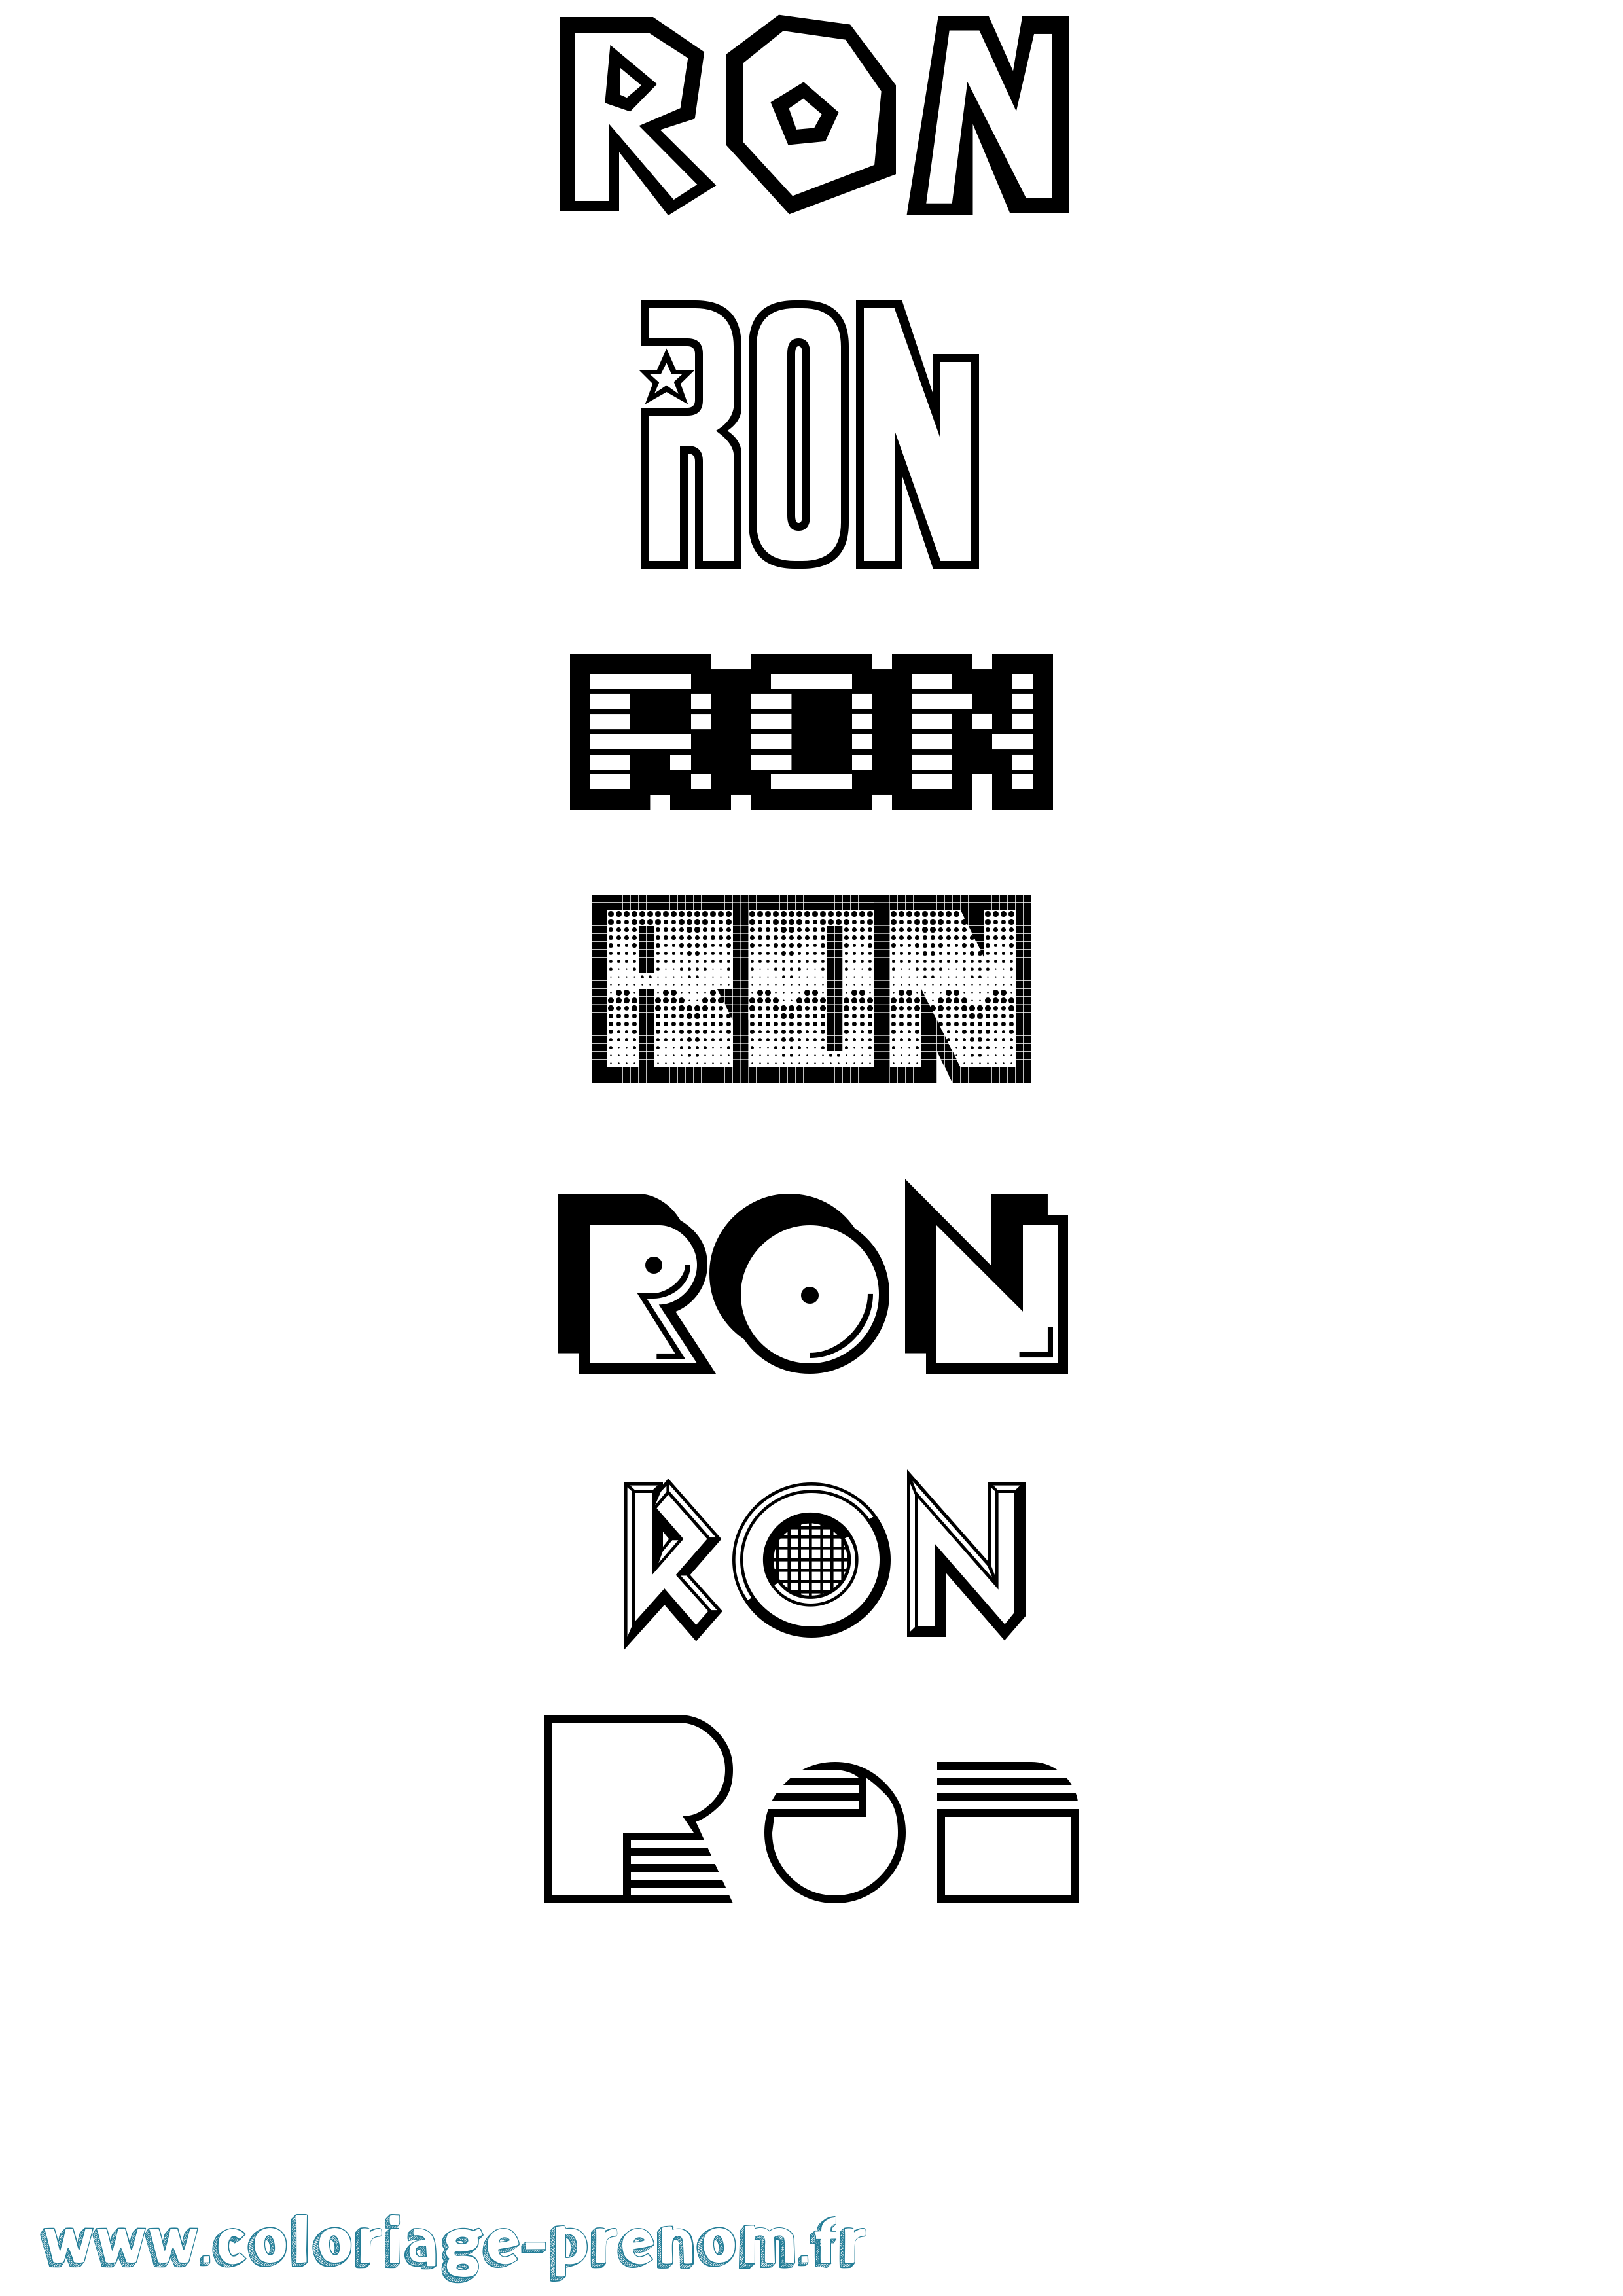 Coloriage prénom Ron